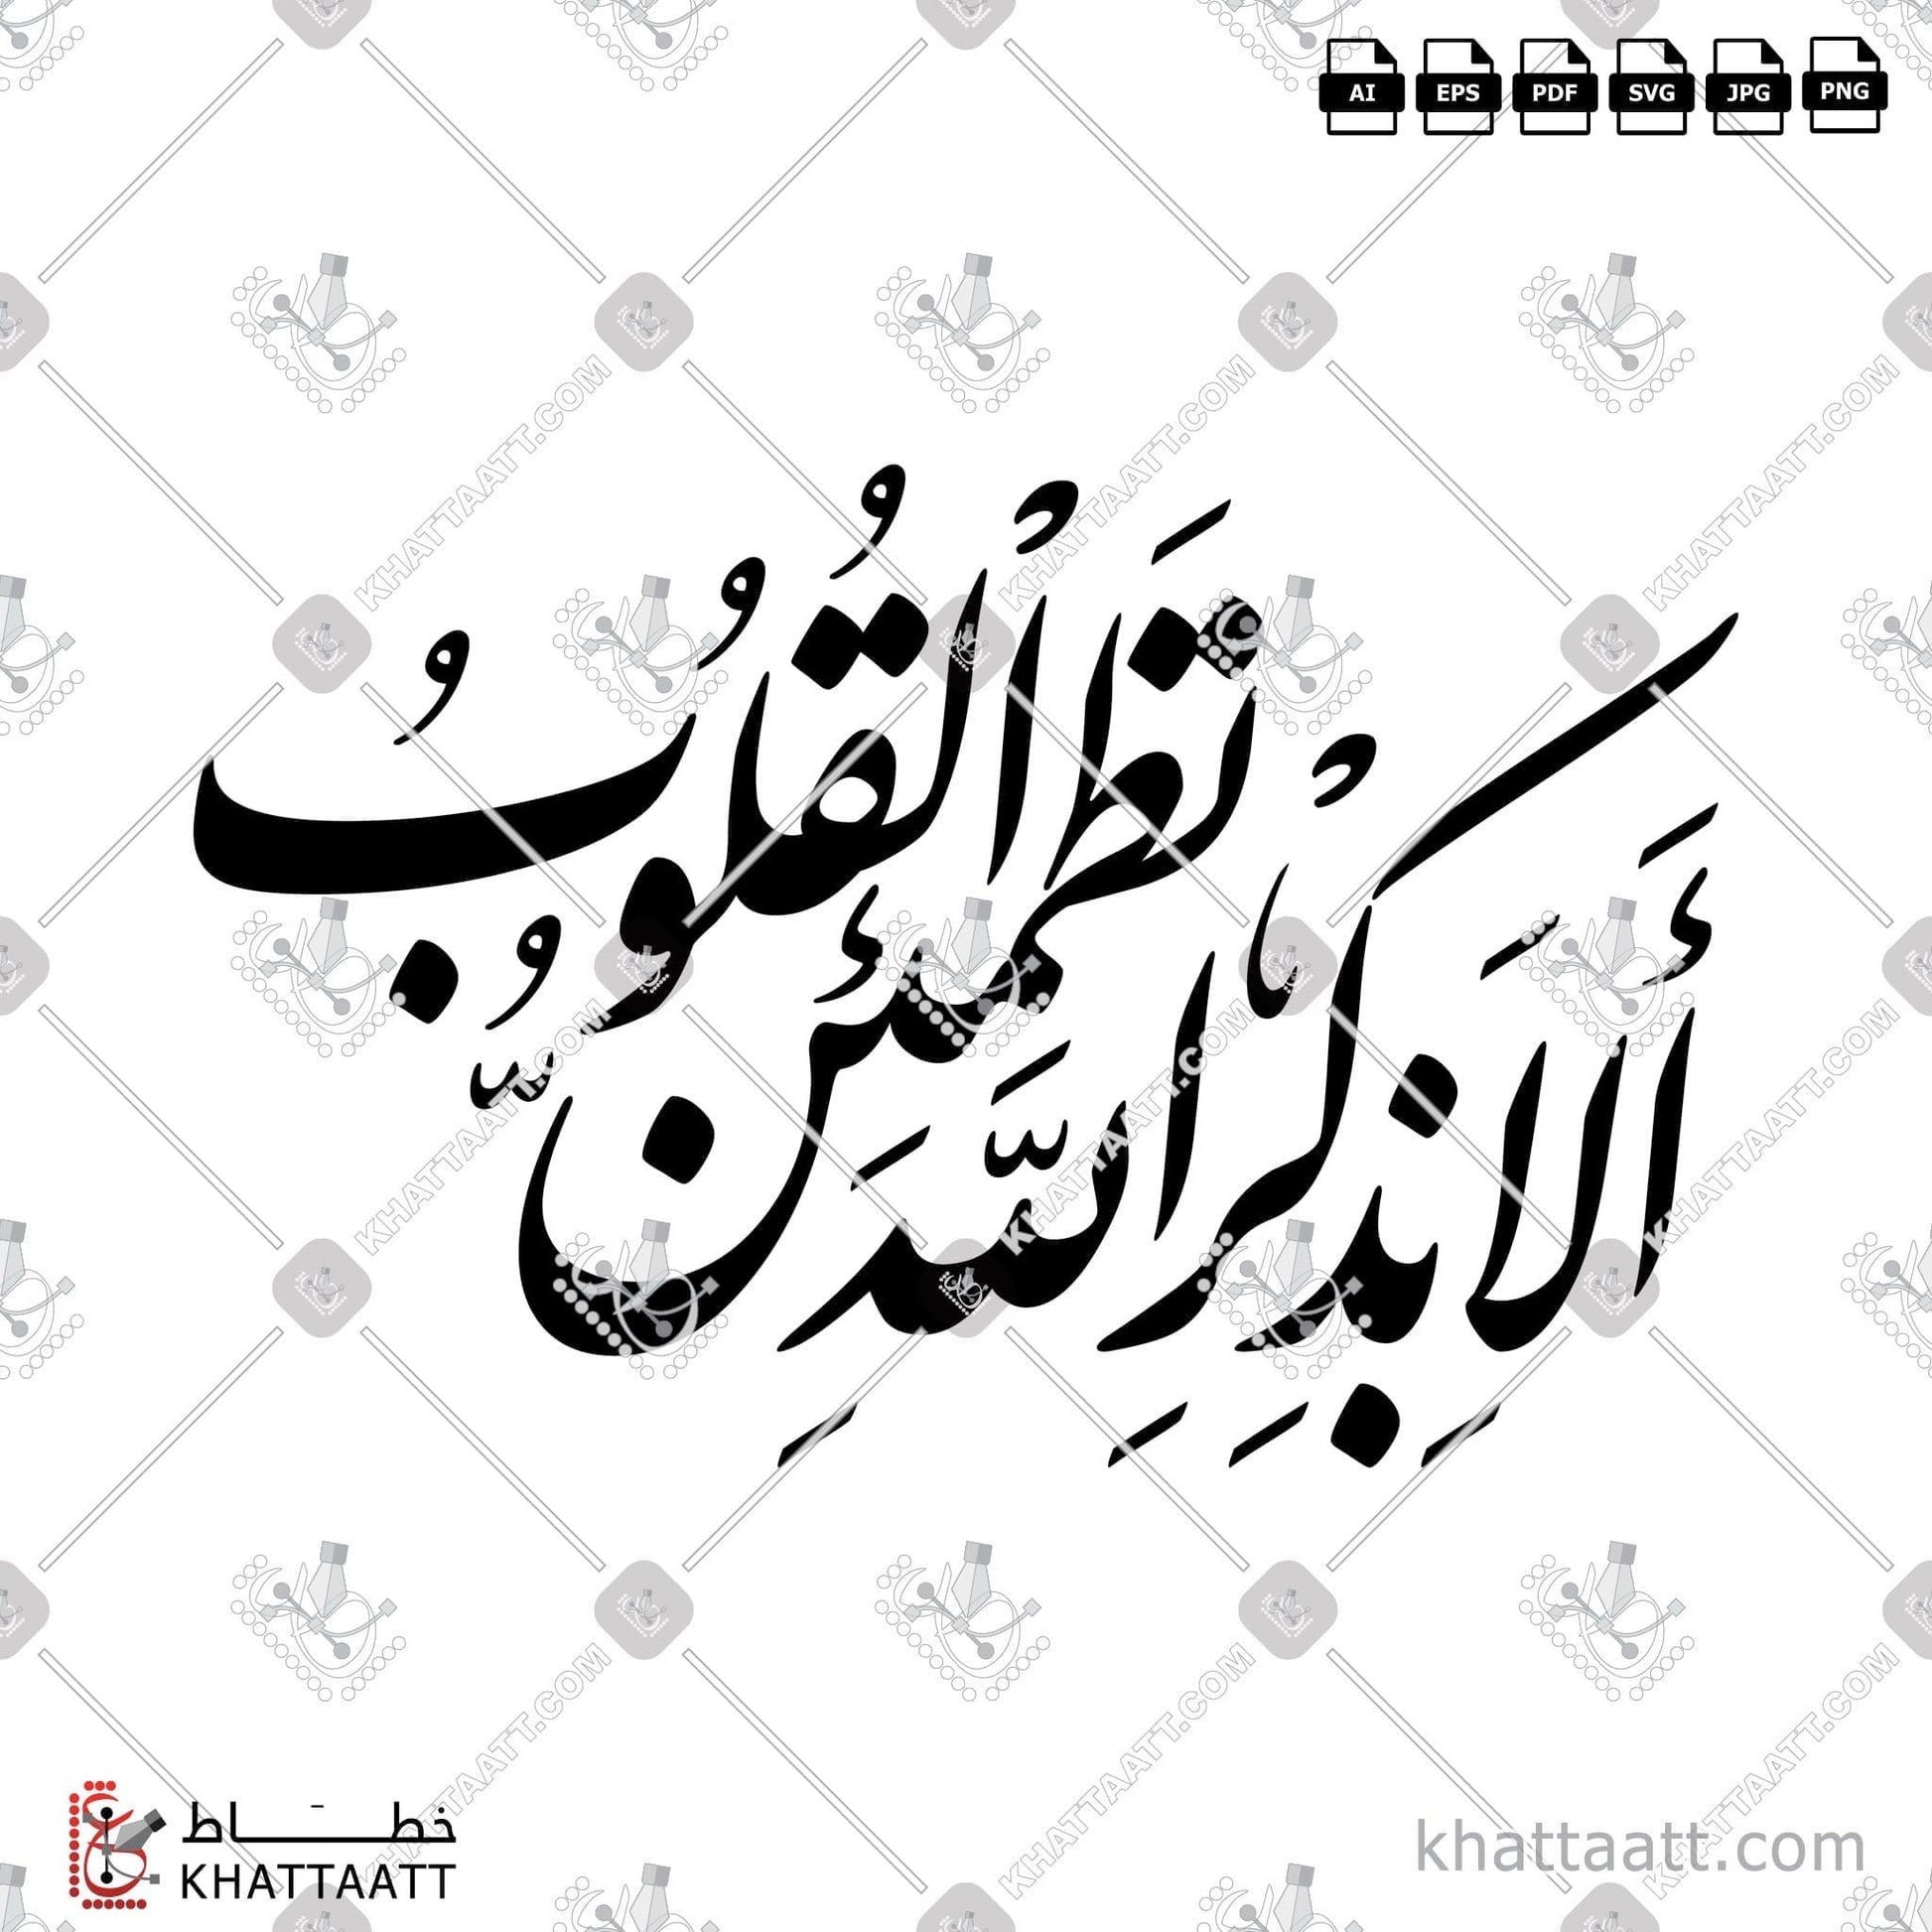 Download Arabic Calligraphy of ألا بذكر الله تطمئن القلوب in Thuluth - خط الثلث in vector and .png